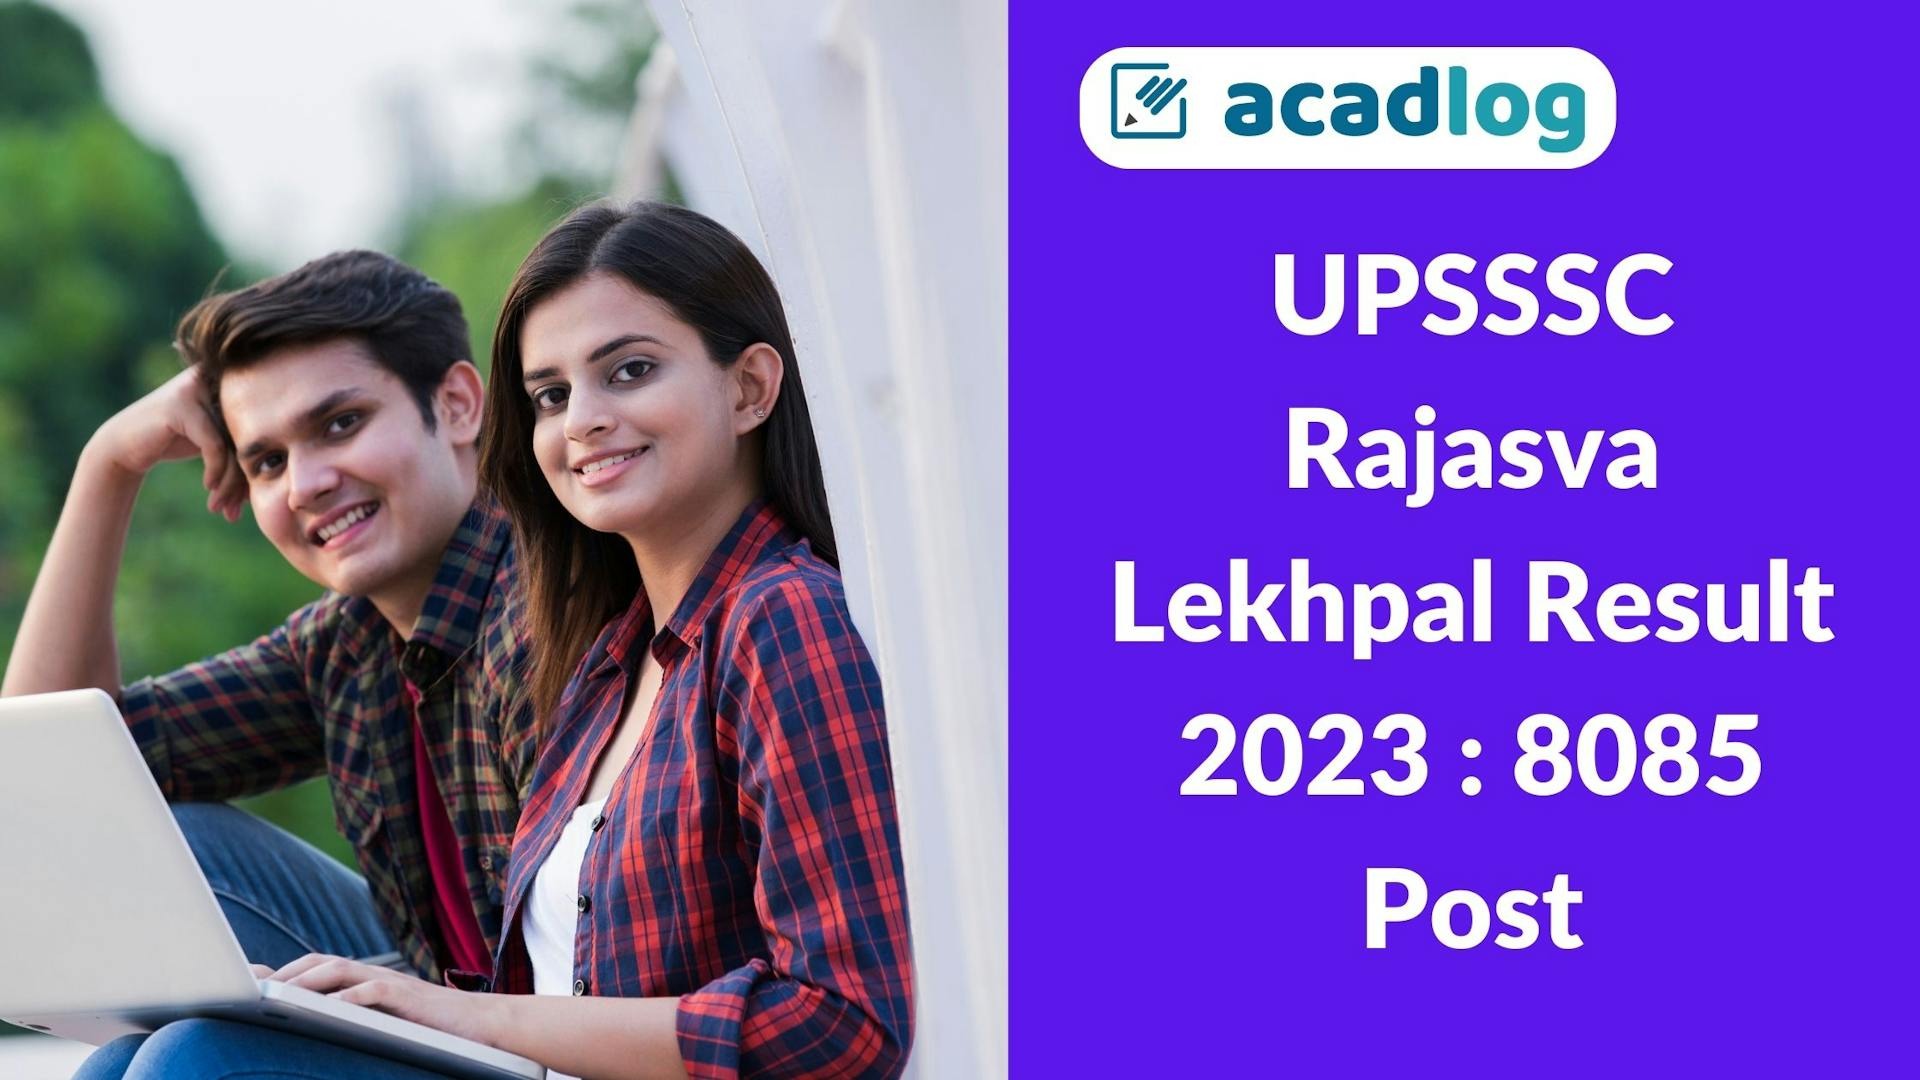 Acadlog: UPSSSC UP Rajasva Lekhpal Recruitment 2022 Mains Exam Result 2023